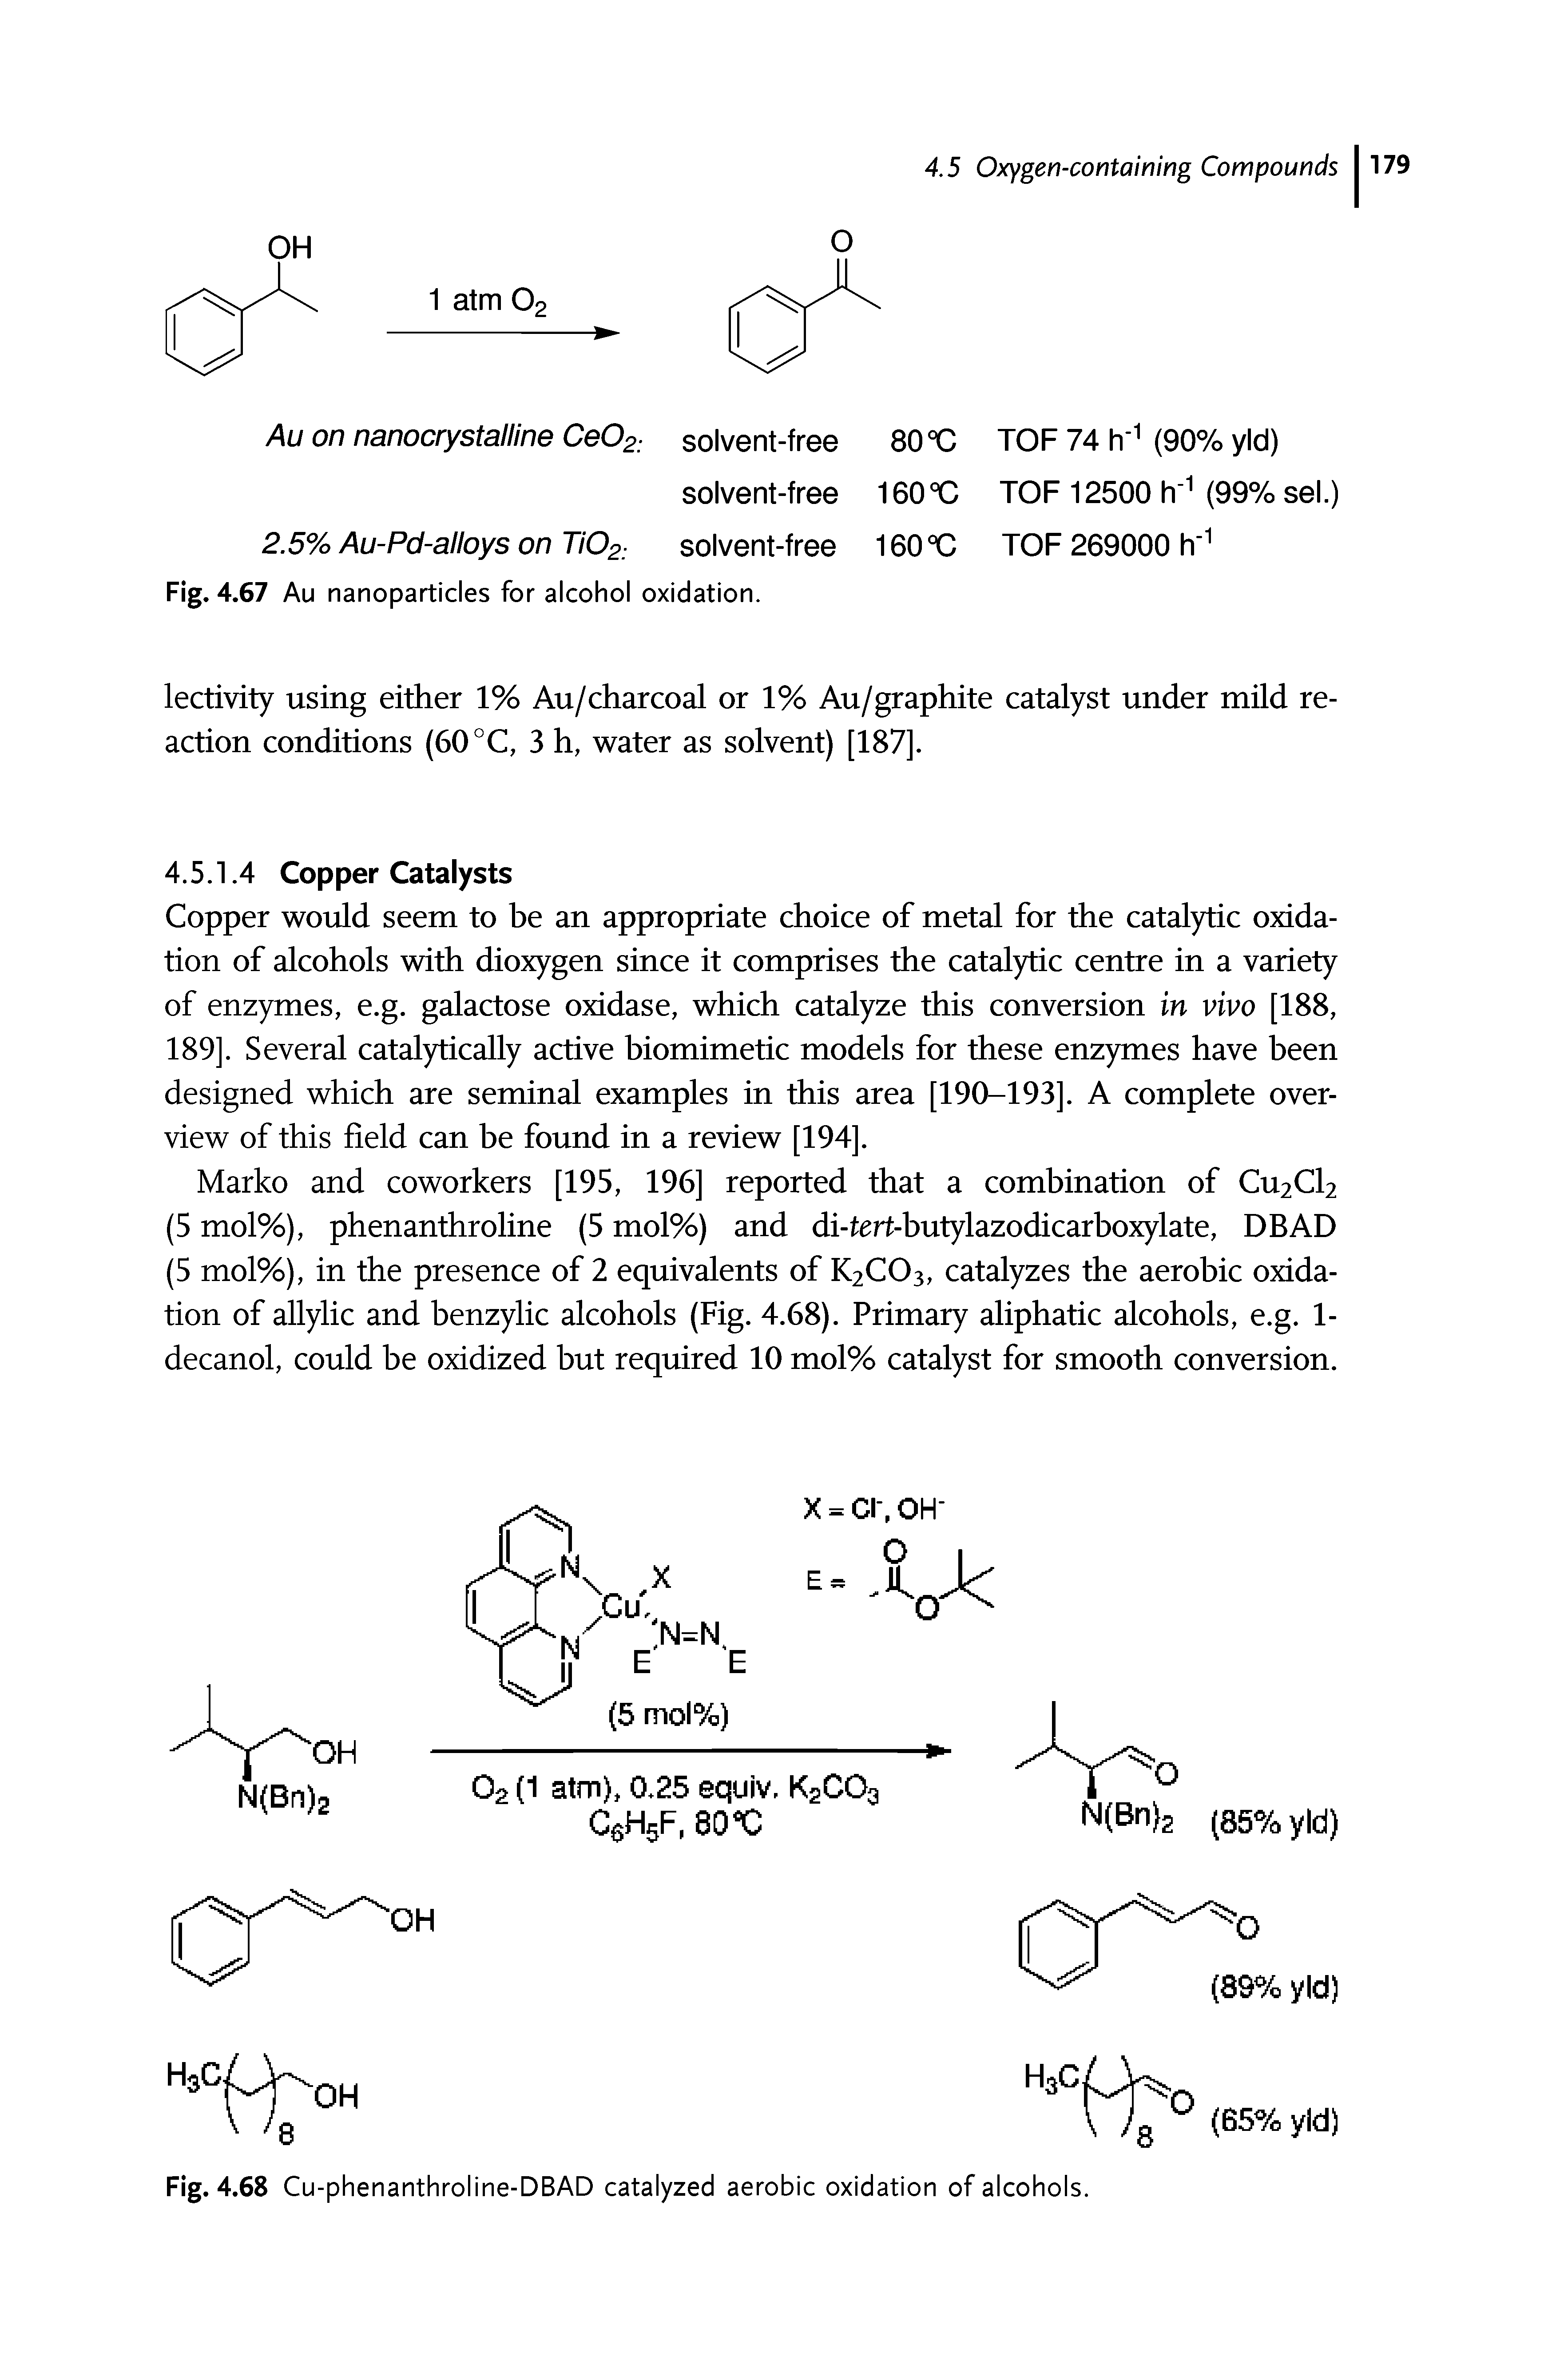 Fig. 4.68 Cu-phenanthroline-DBAD catalyzed aerobic oxidation of alcohols.